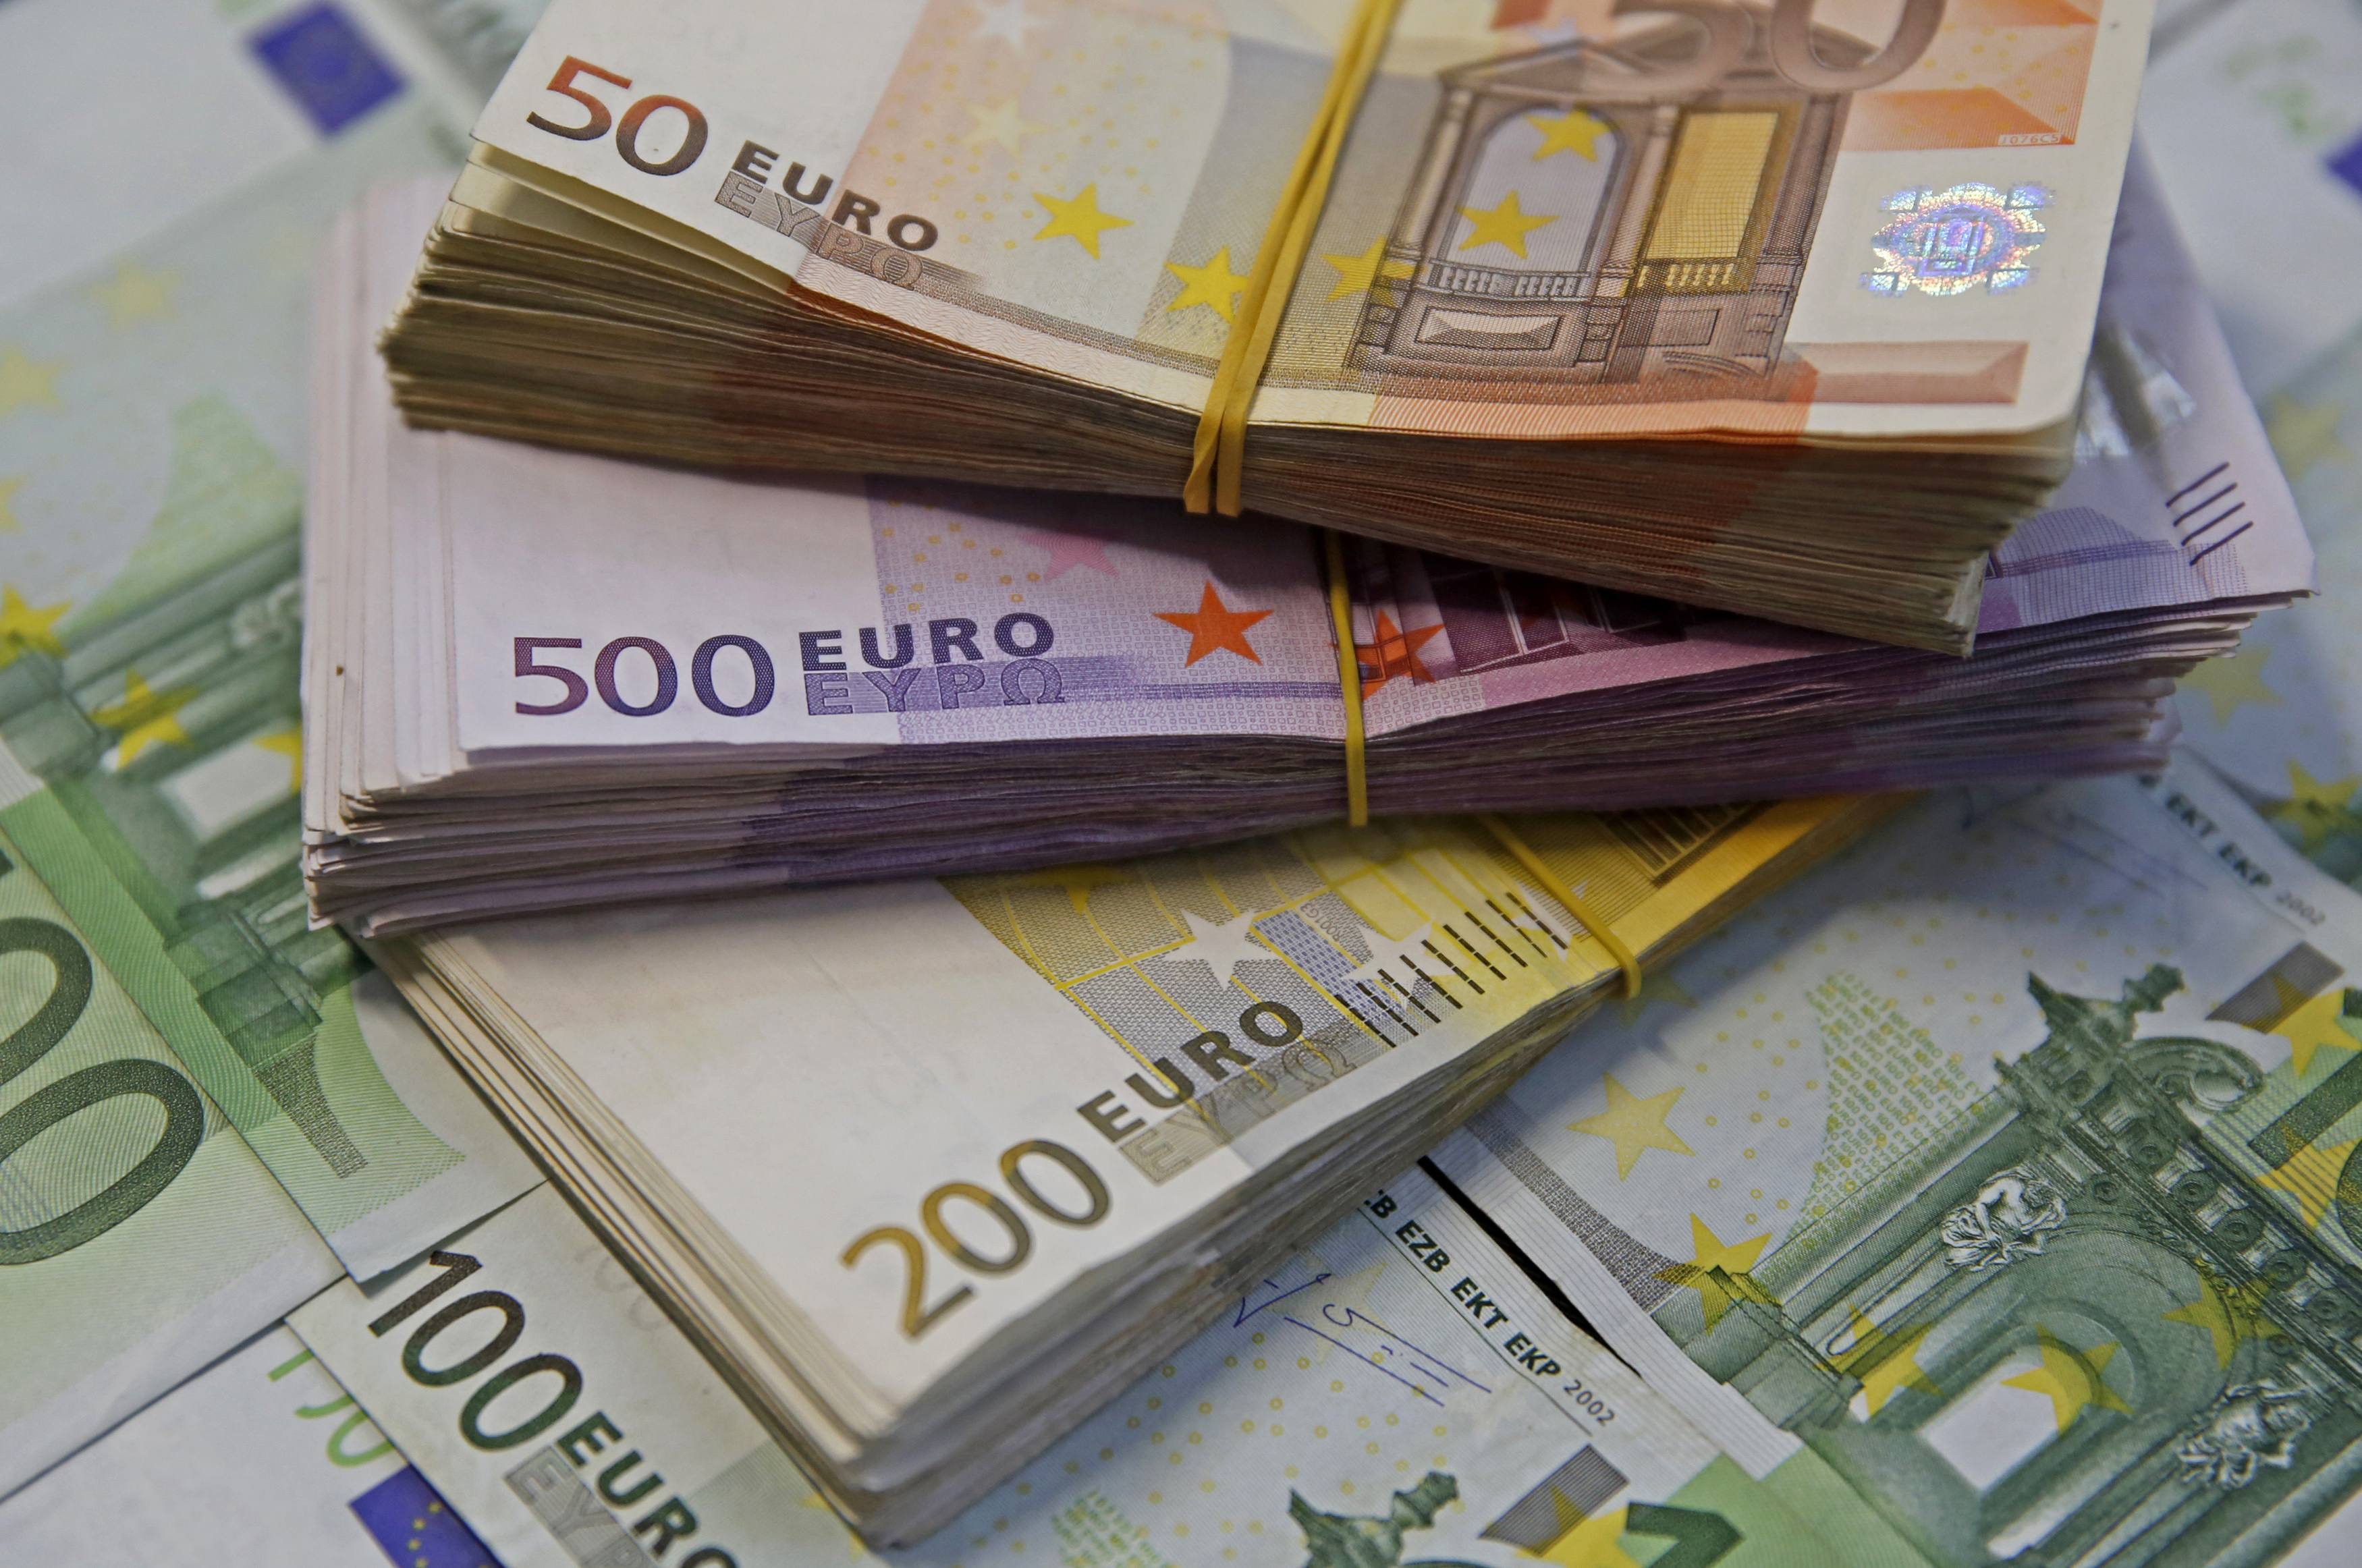 Primary surplus amounts to 3.7 billion euros in July 2015